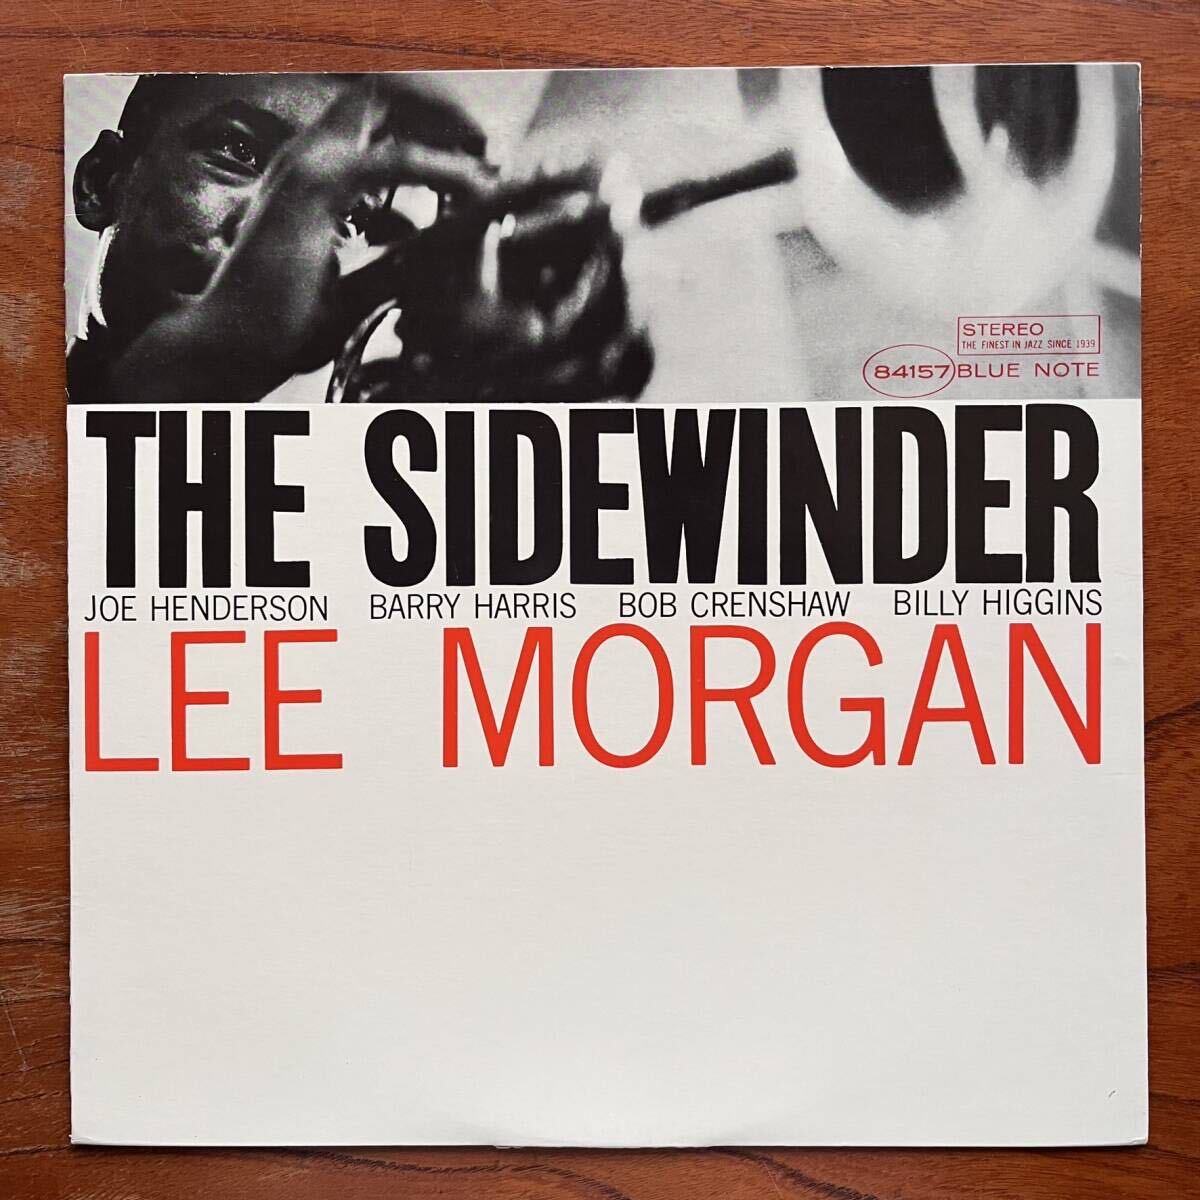 【BLUE NOTE キング盤 ブルーノート】LEE MORGAN『THE SIDEWINDER』リー・モーガン/ジョー・ヘンダーソン/JOE HENDERSON/BARRY HARRIS_画像1